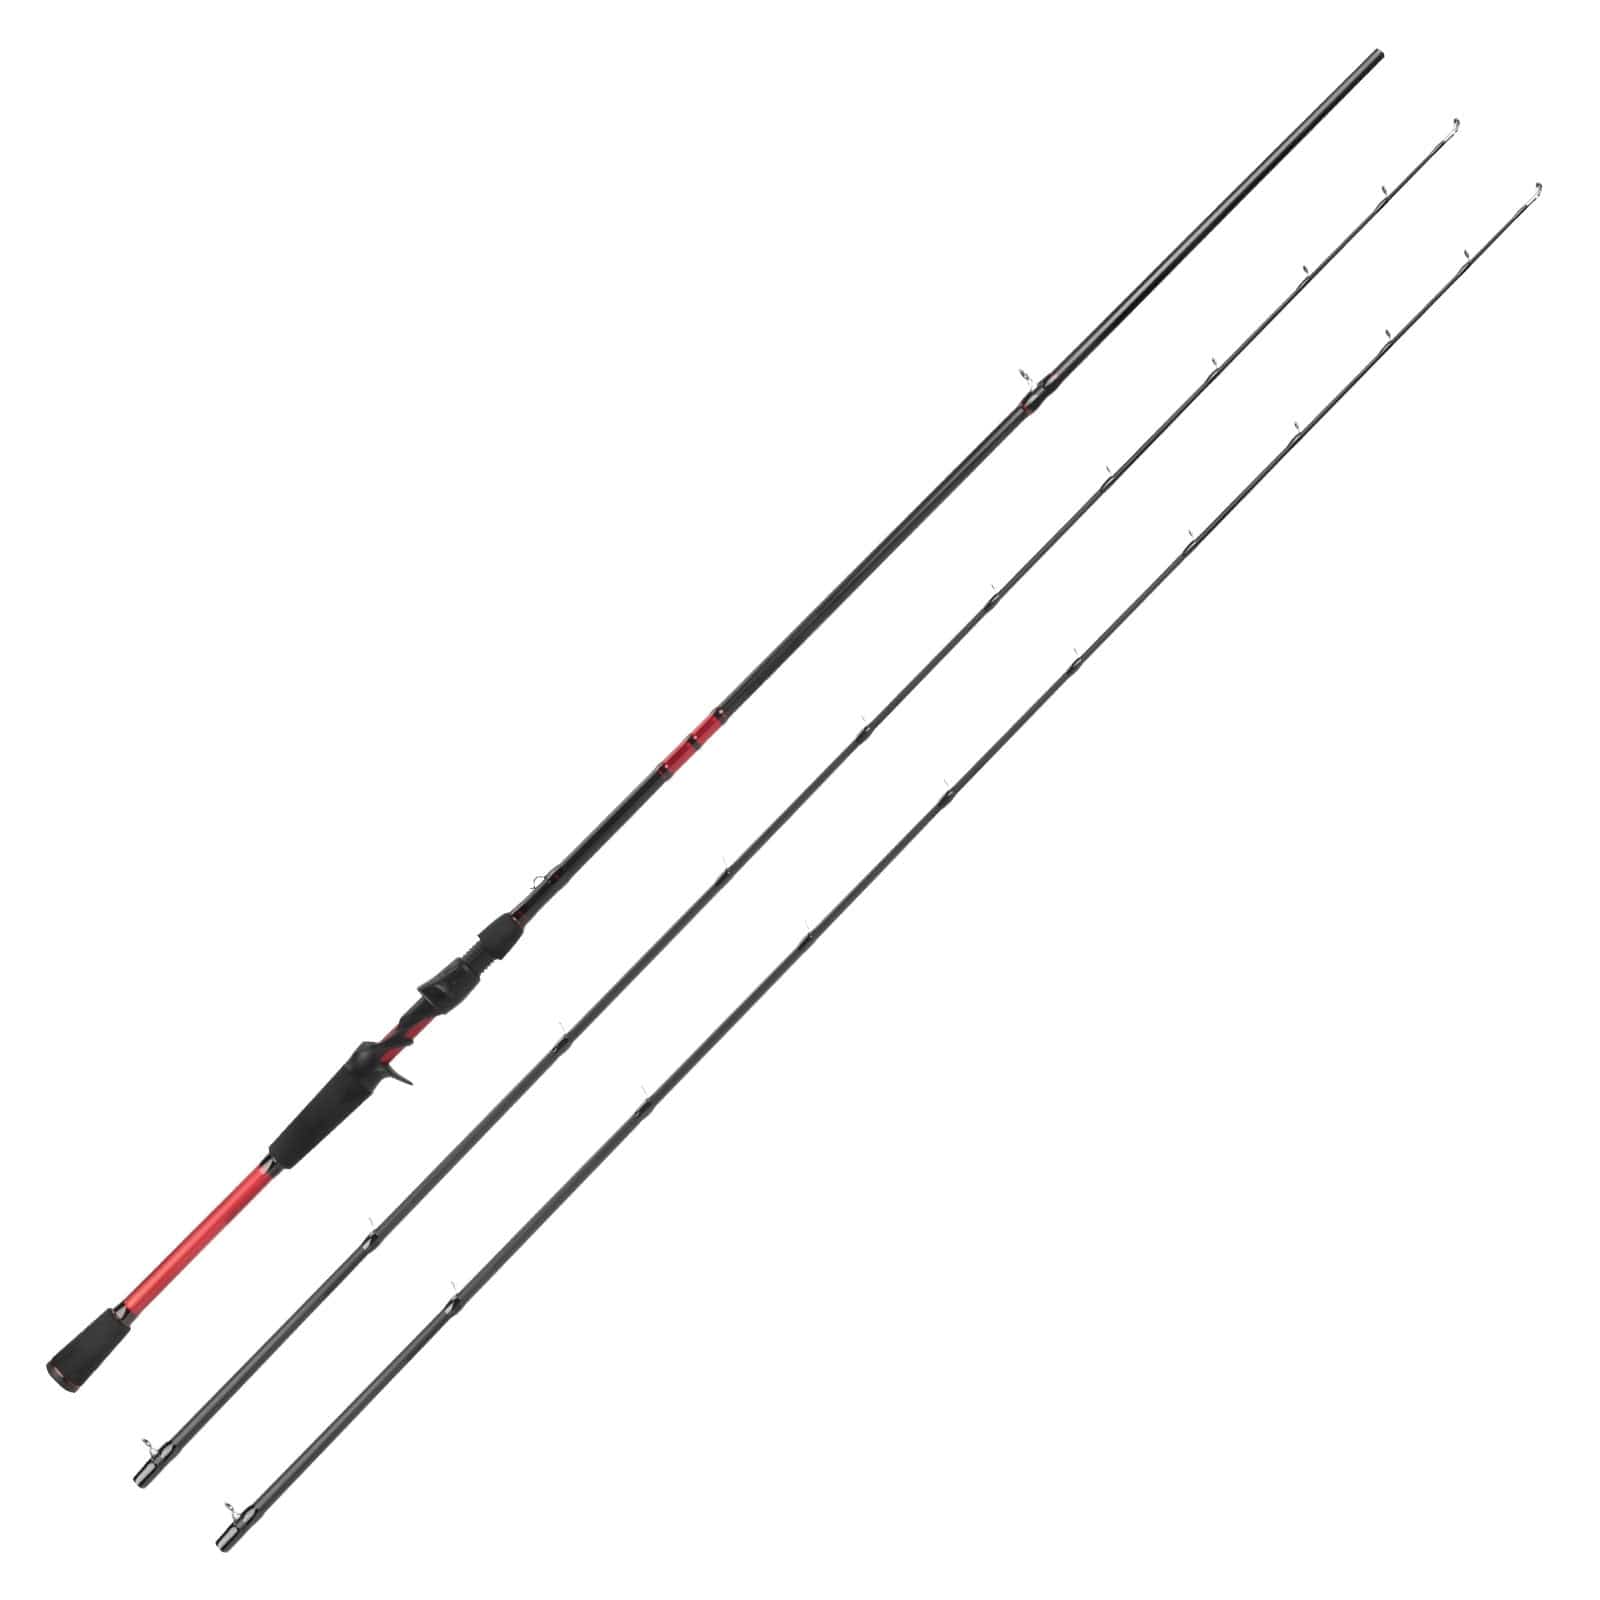 KastKing Royale Advantage Twin Tip Fishing Rods